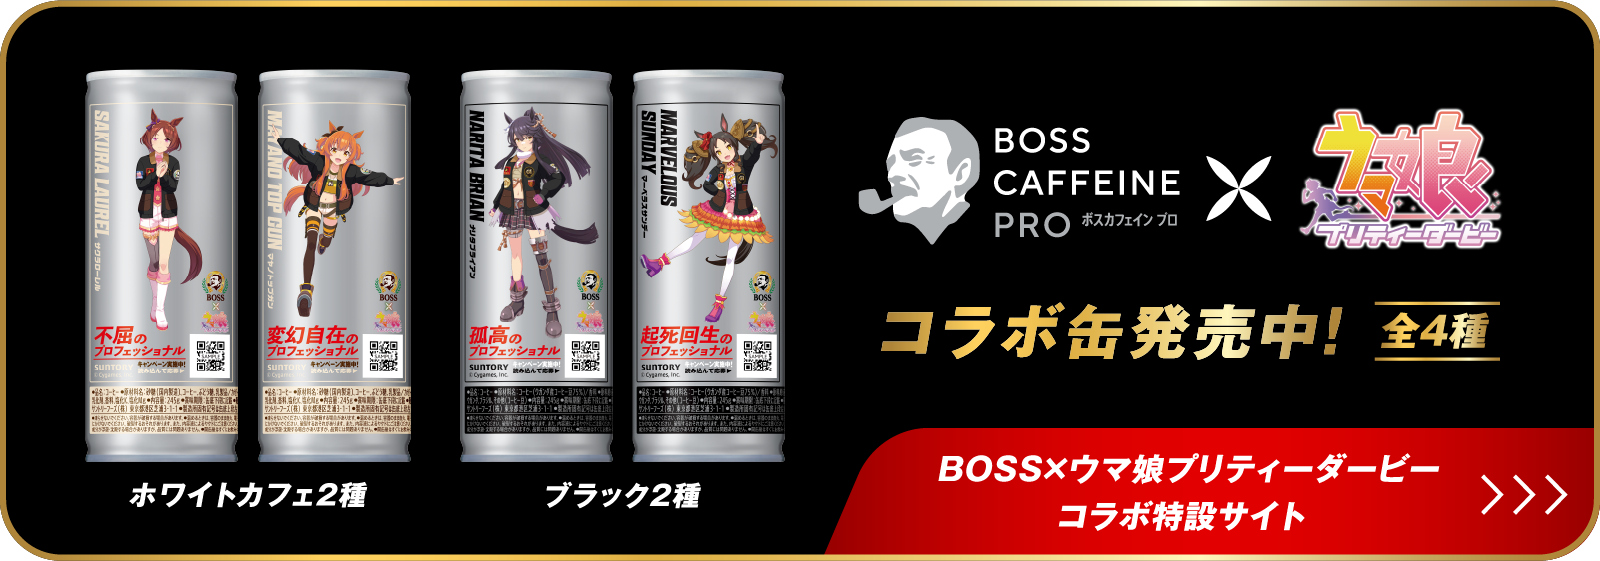 BOSS CAFFEINE PRO x ウマ娘プリティーダービー コラボ缶発売中！全4種 BOSS x ウマ娘プリティーダービーコラボ特設サイト